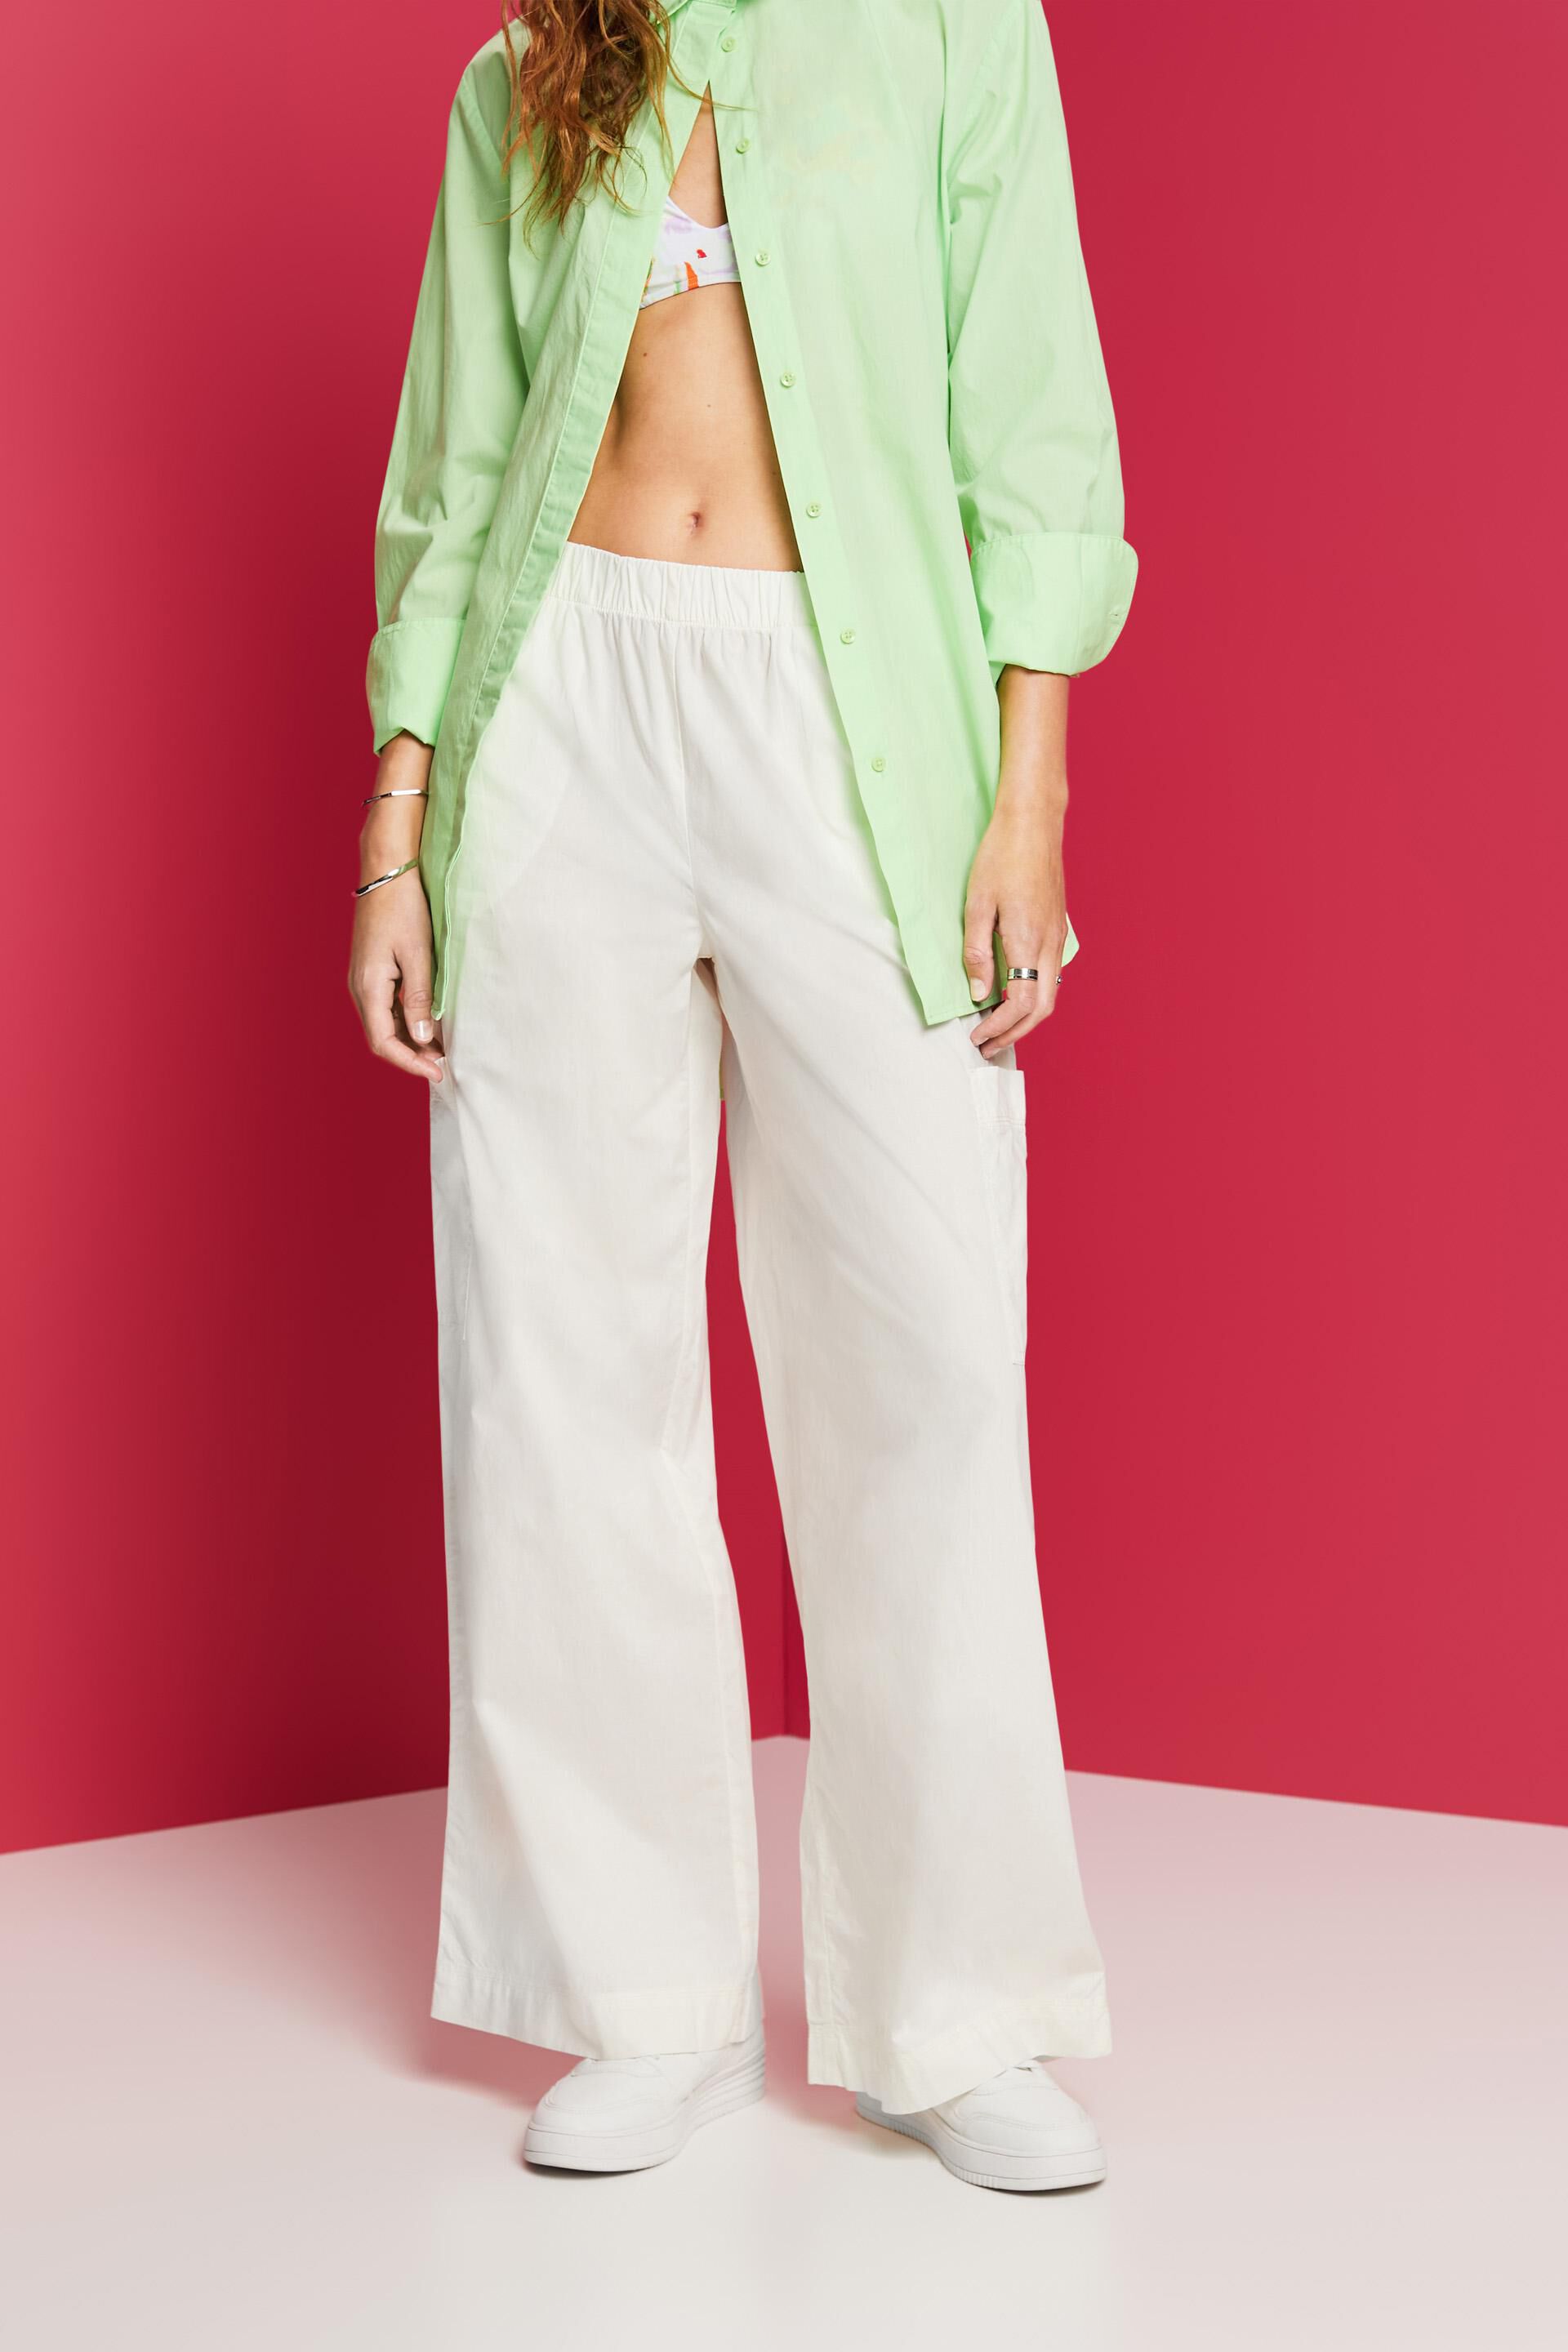 Esprit Damen Pull-on cargo trousers, 100% cotton